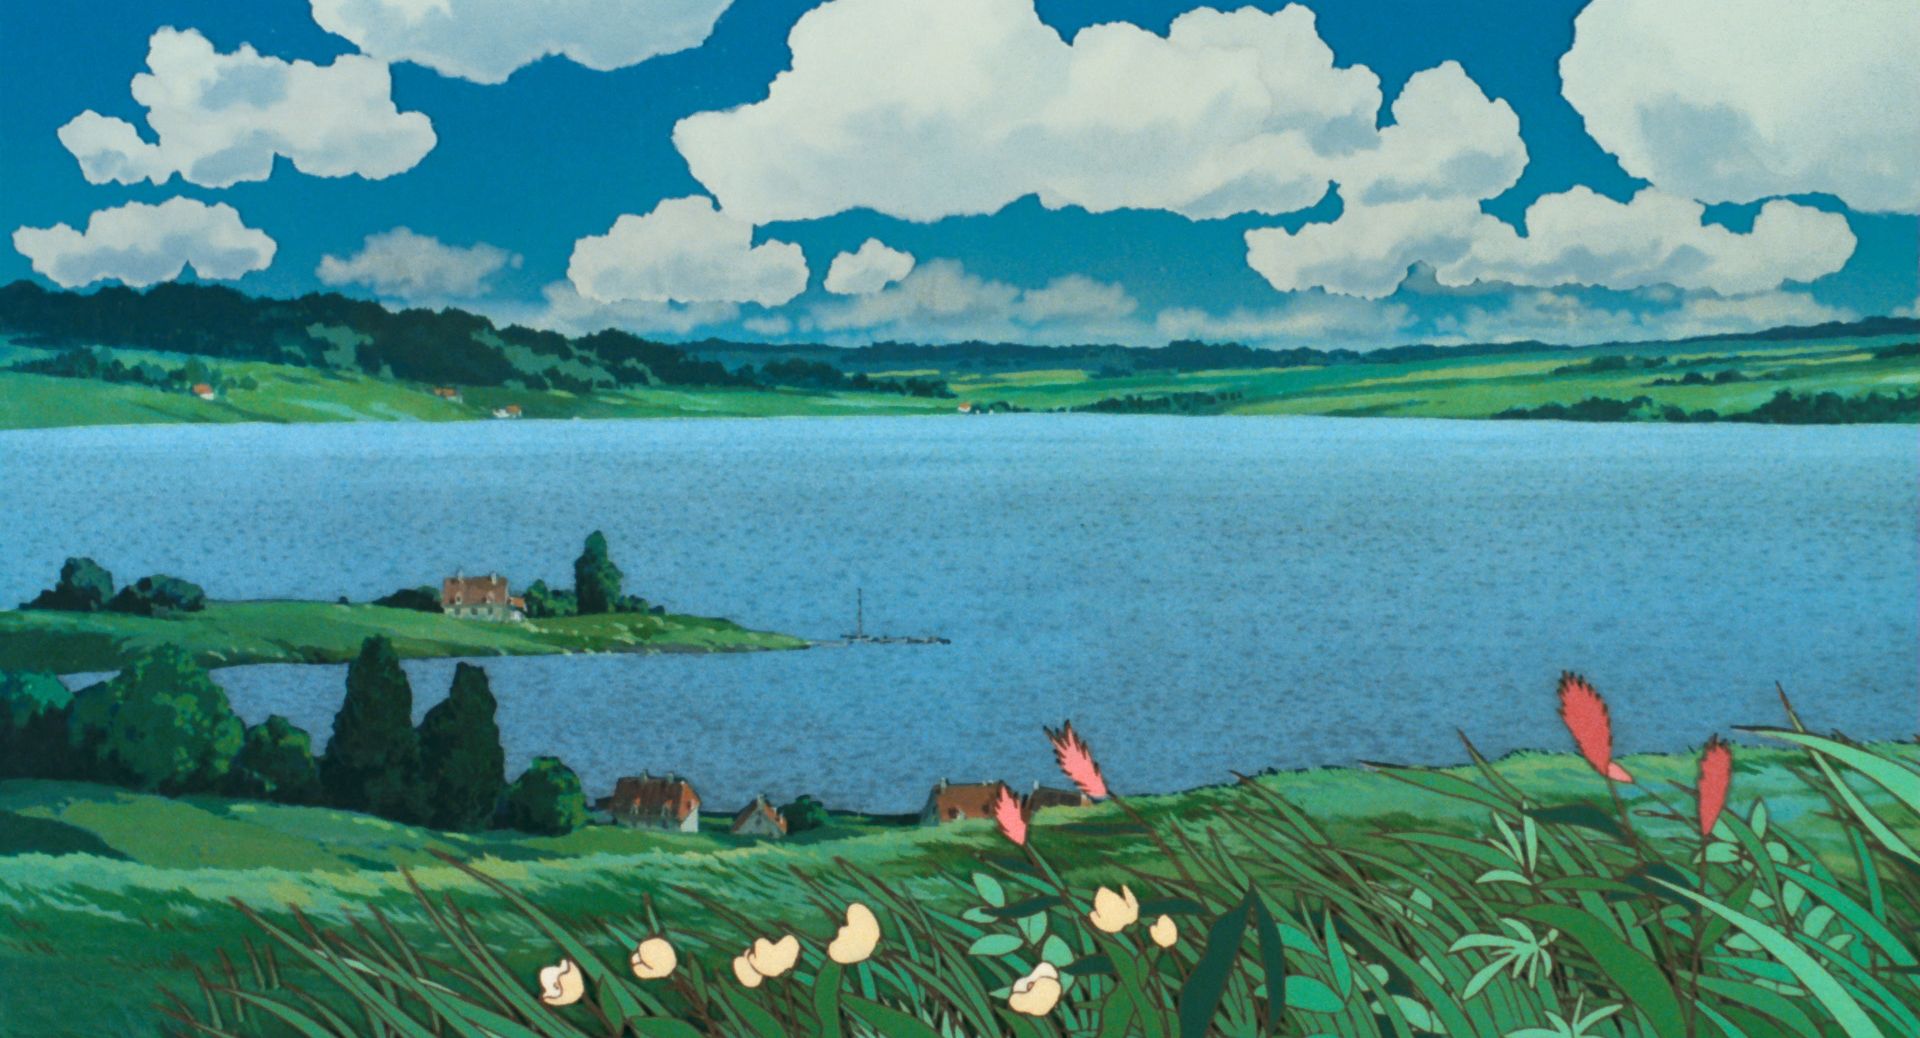 Studio Ghibli landscapes